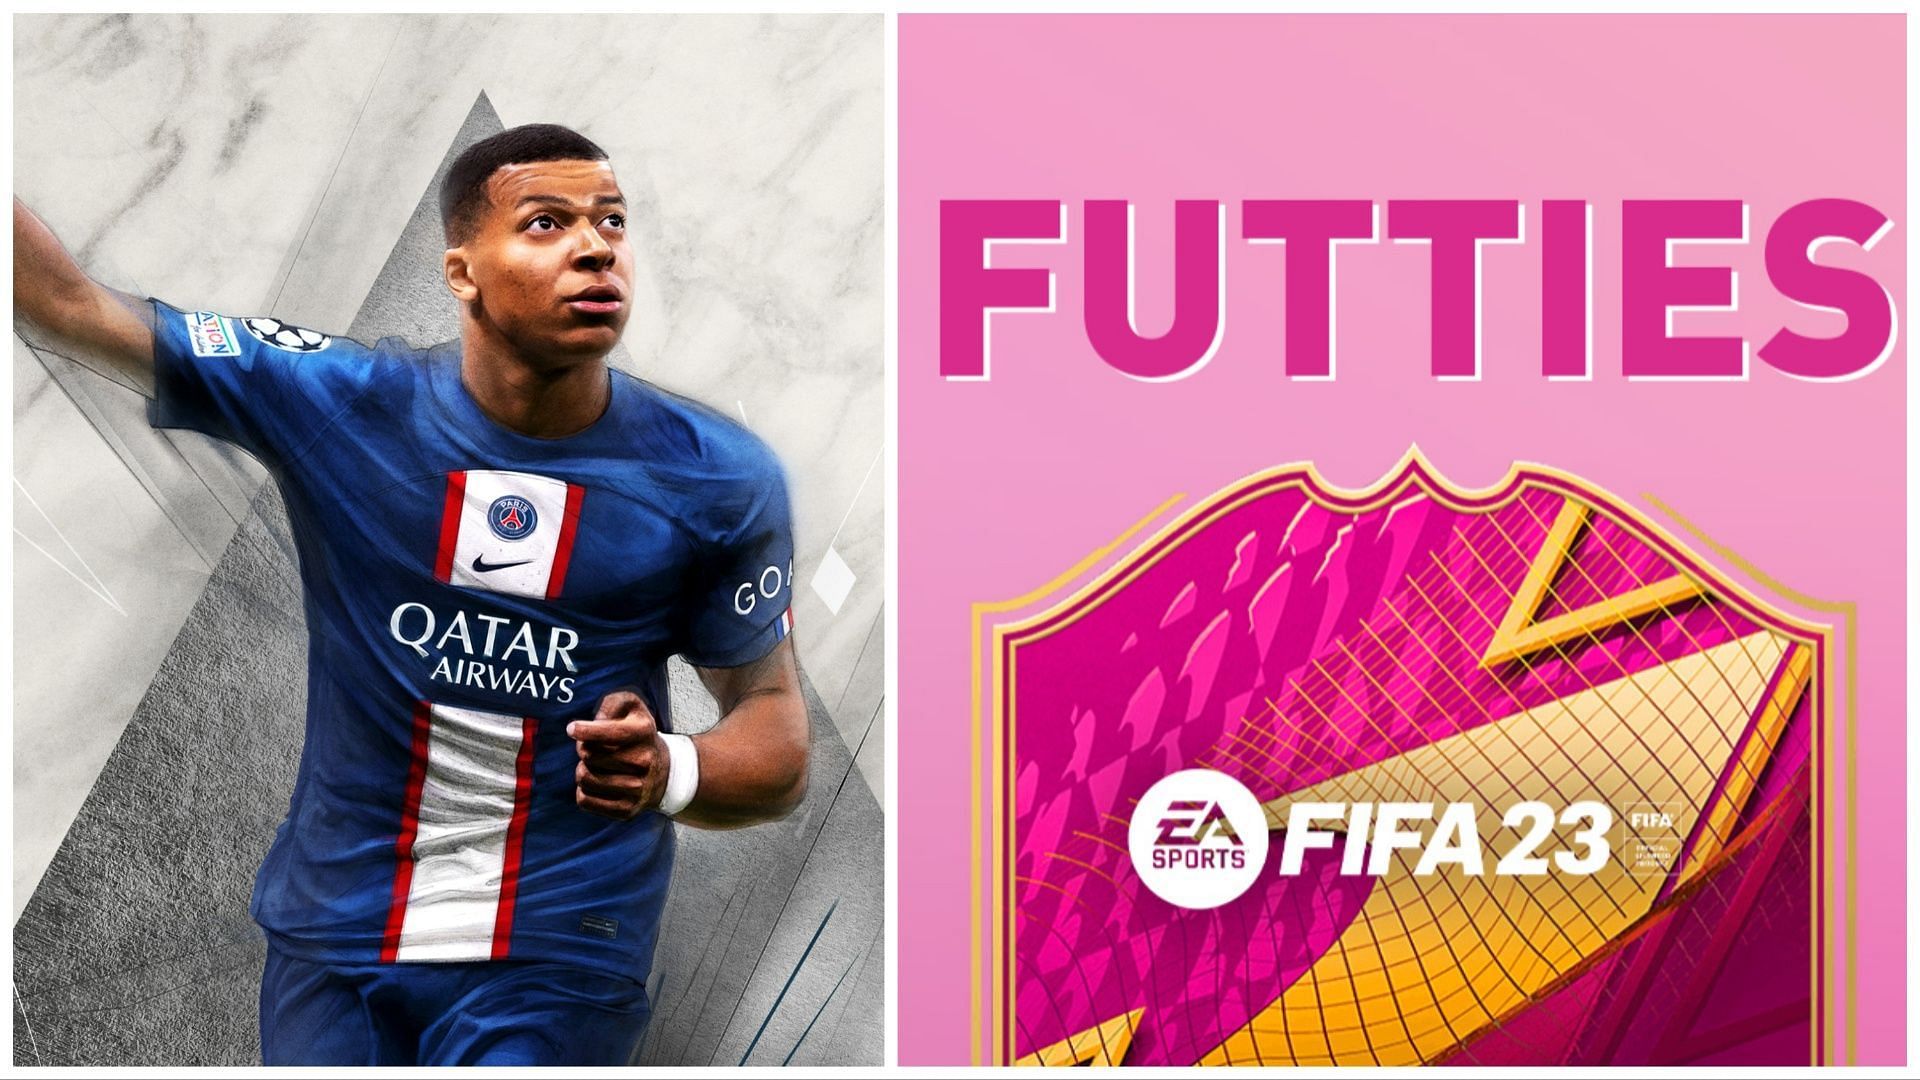 FIFA Mobile Events & Programs – FIFPlay